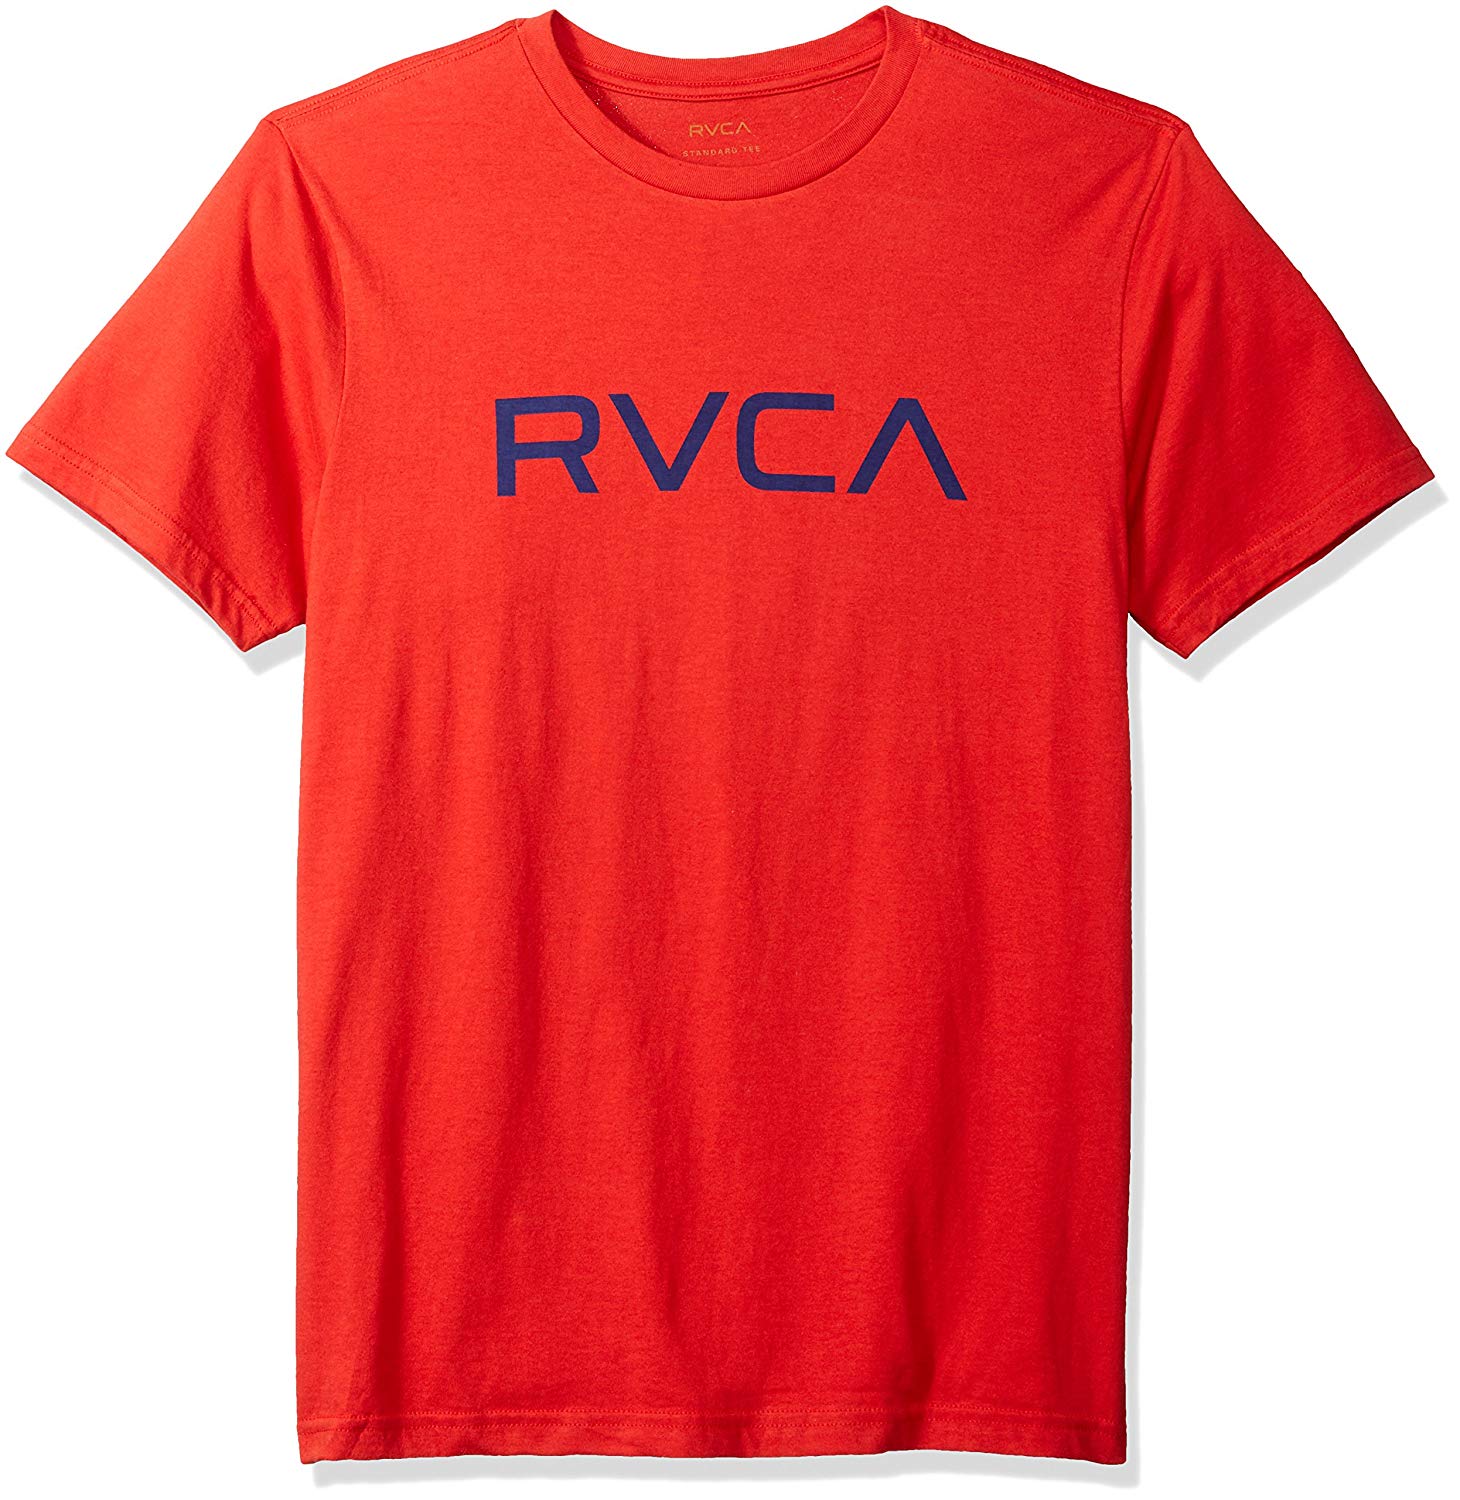 RVCA Clothing Logo - Amazon.com: RVCA Men's Big Short Sleeve Logo T-Shirt: Clothing